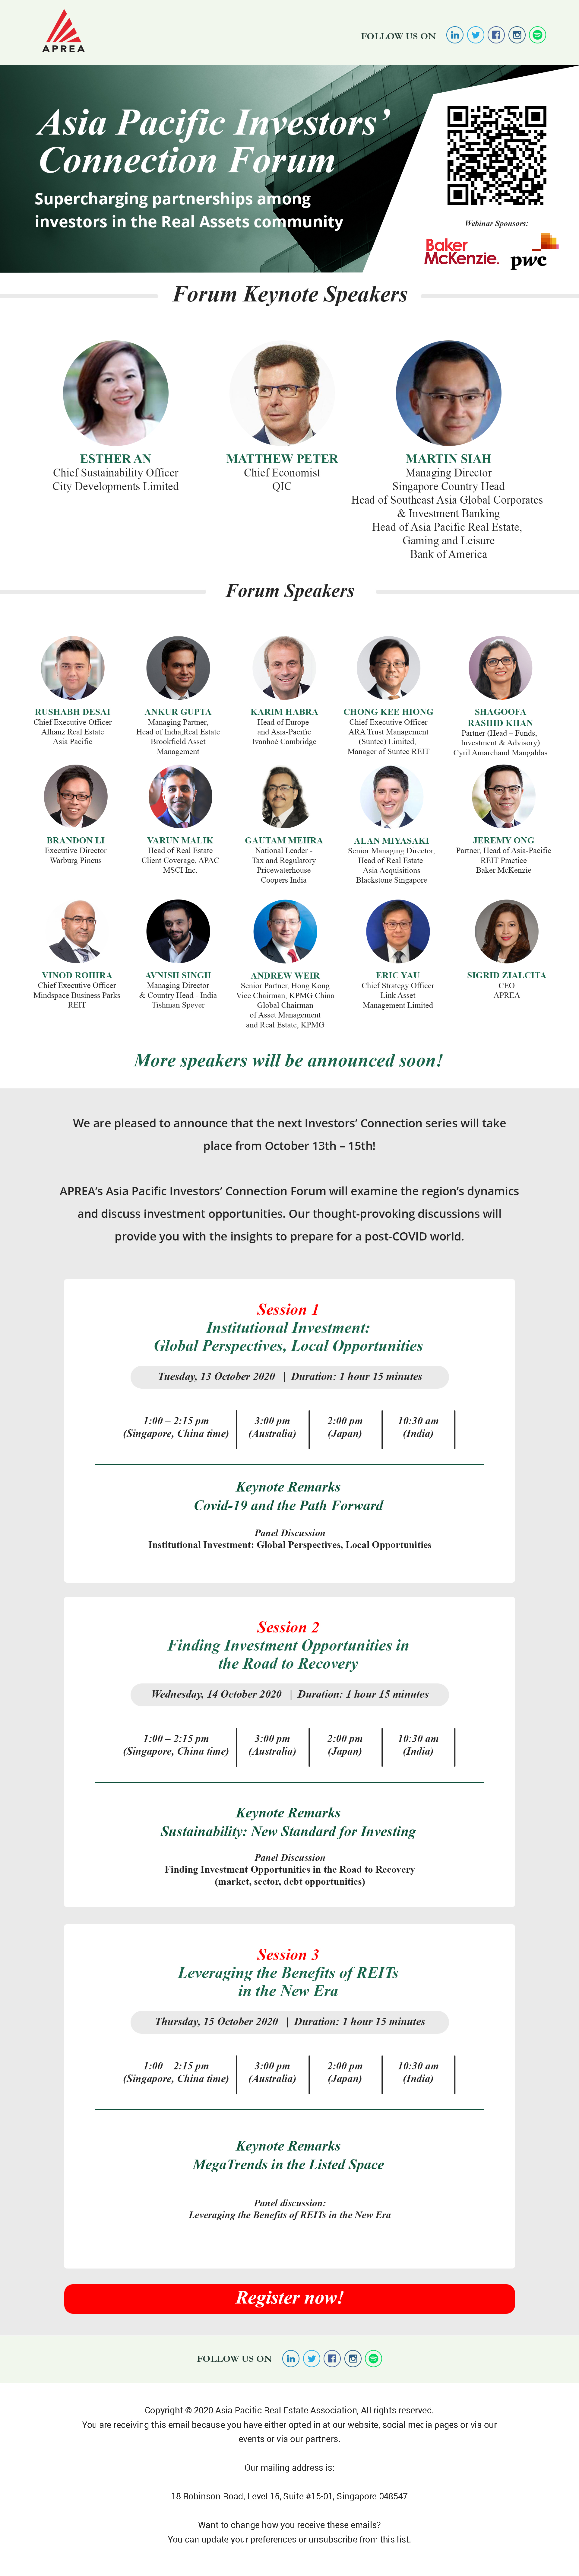 APREA Emailer APAC Forum